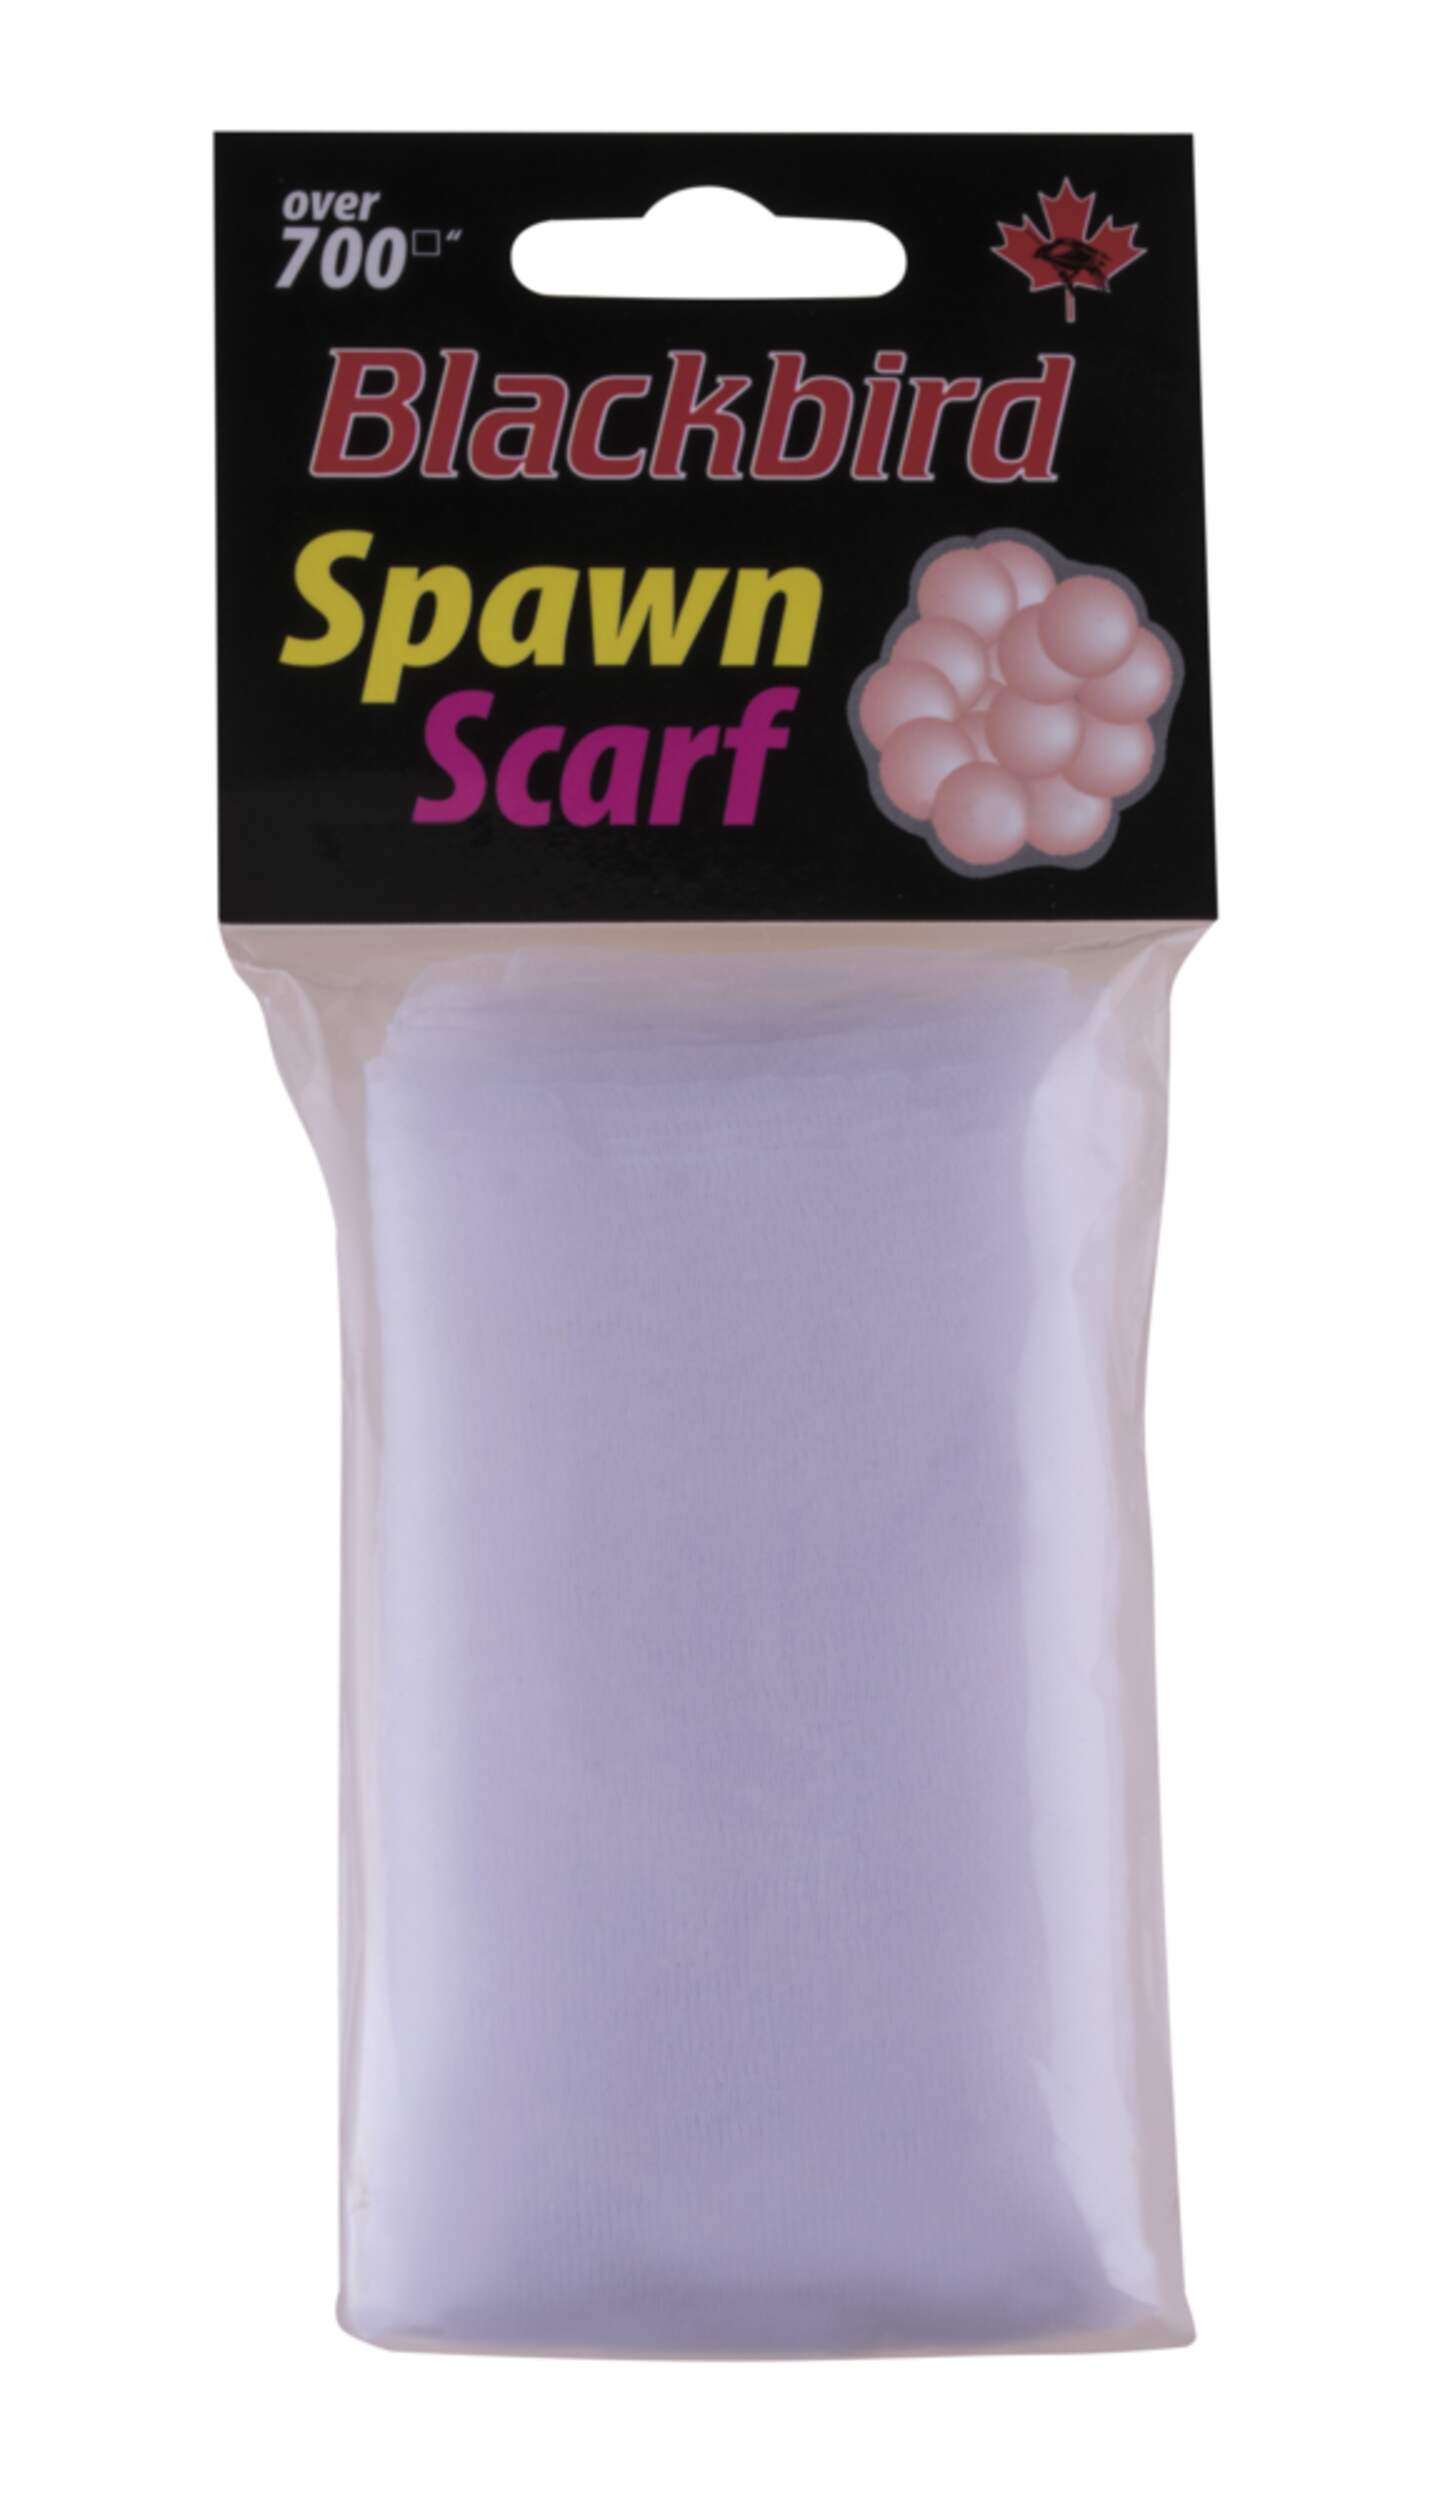 Redwing Spawn Scarf Net